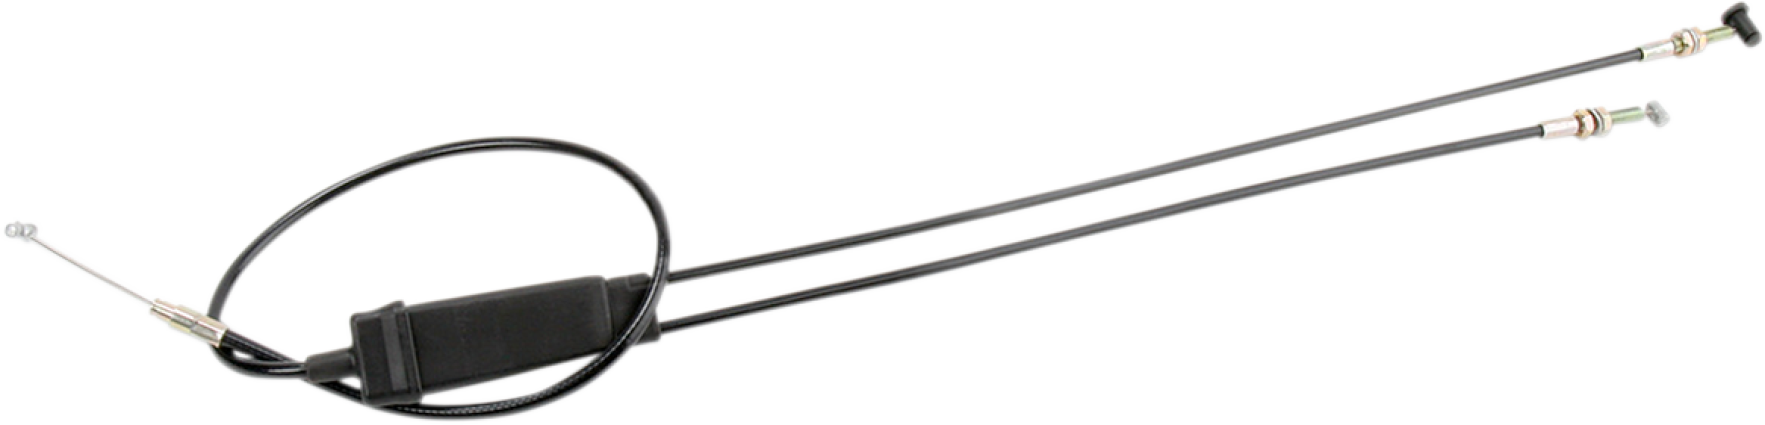 Throttle Cable - Ski-Doo Snowmobile (512059388)